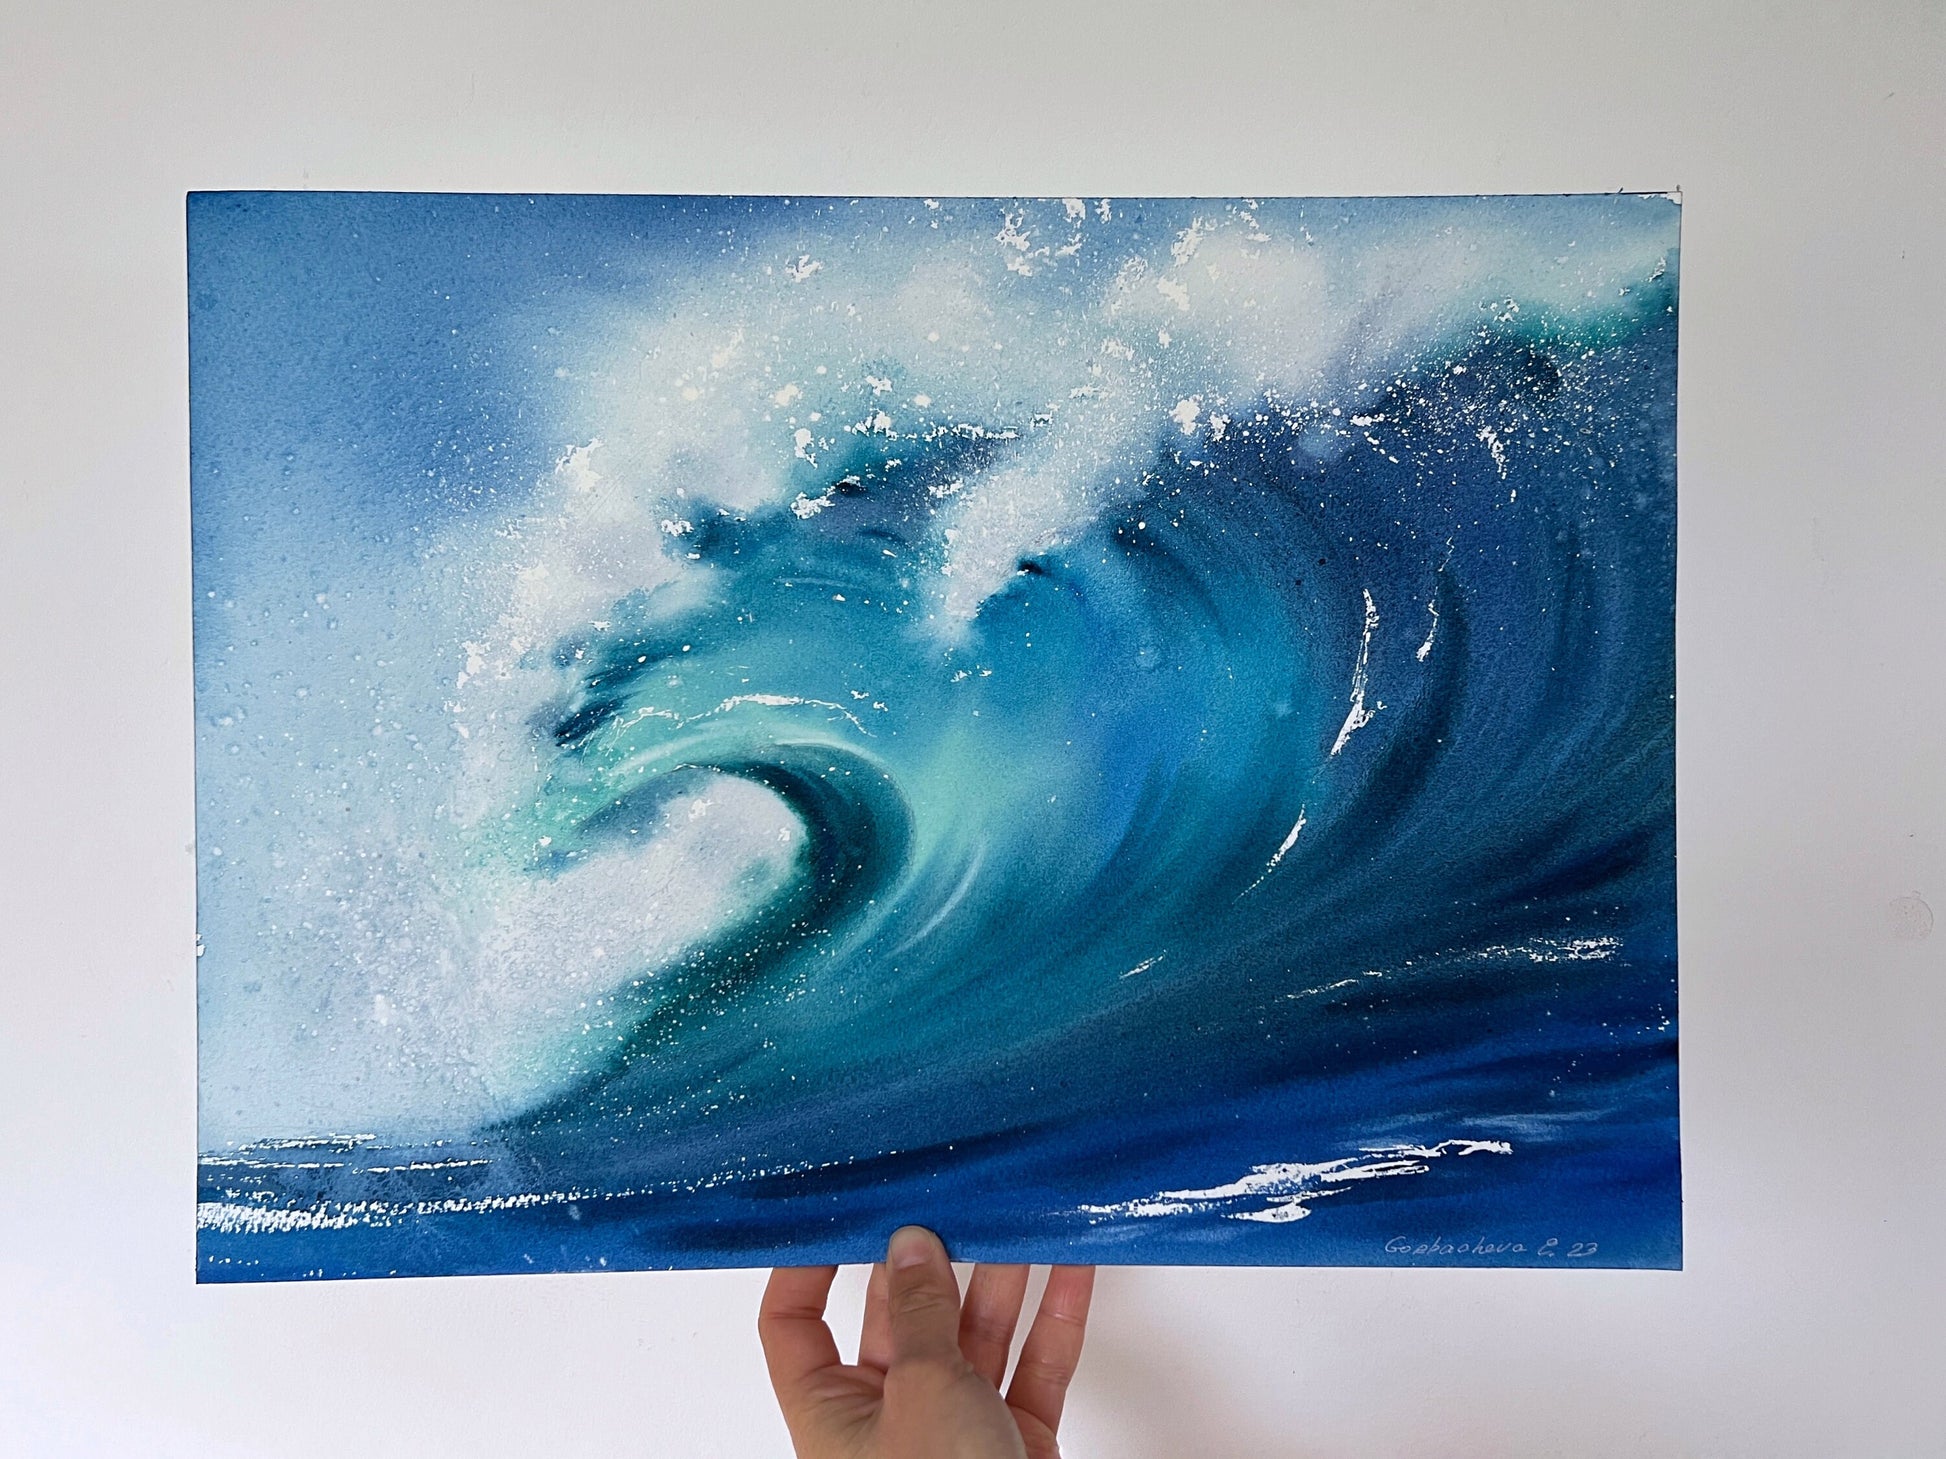 tidal wave art